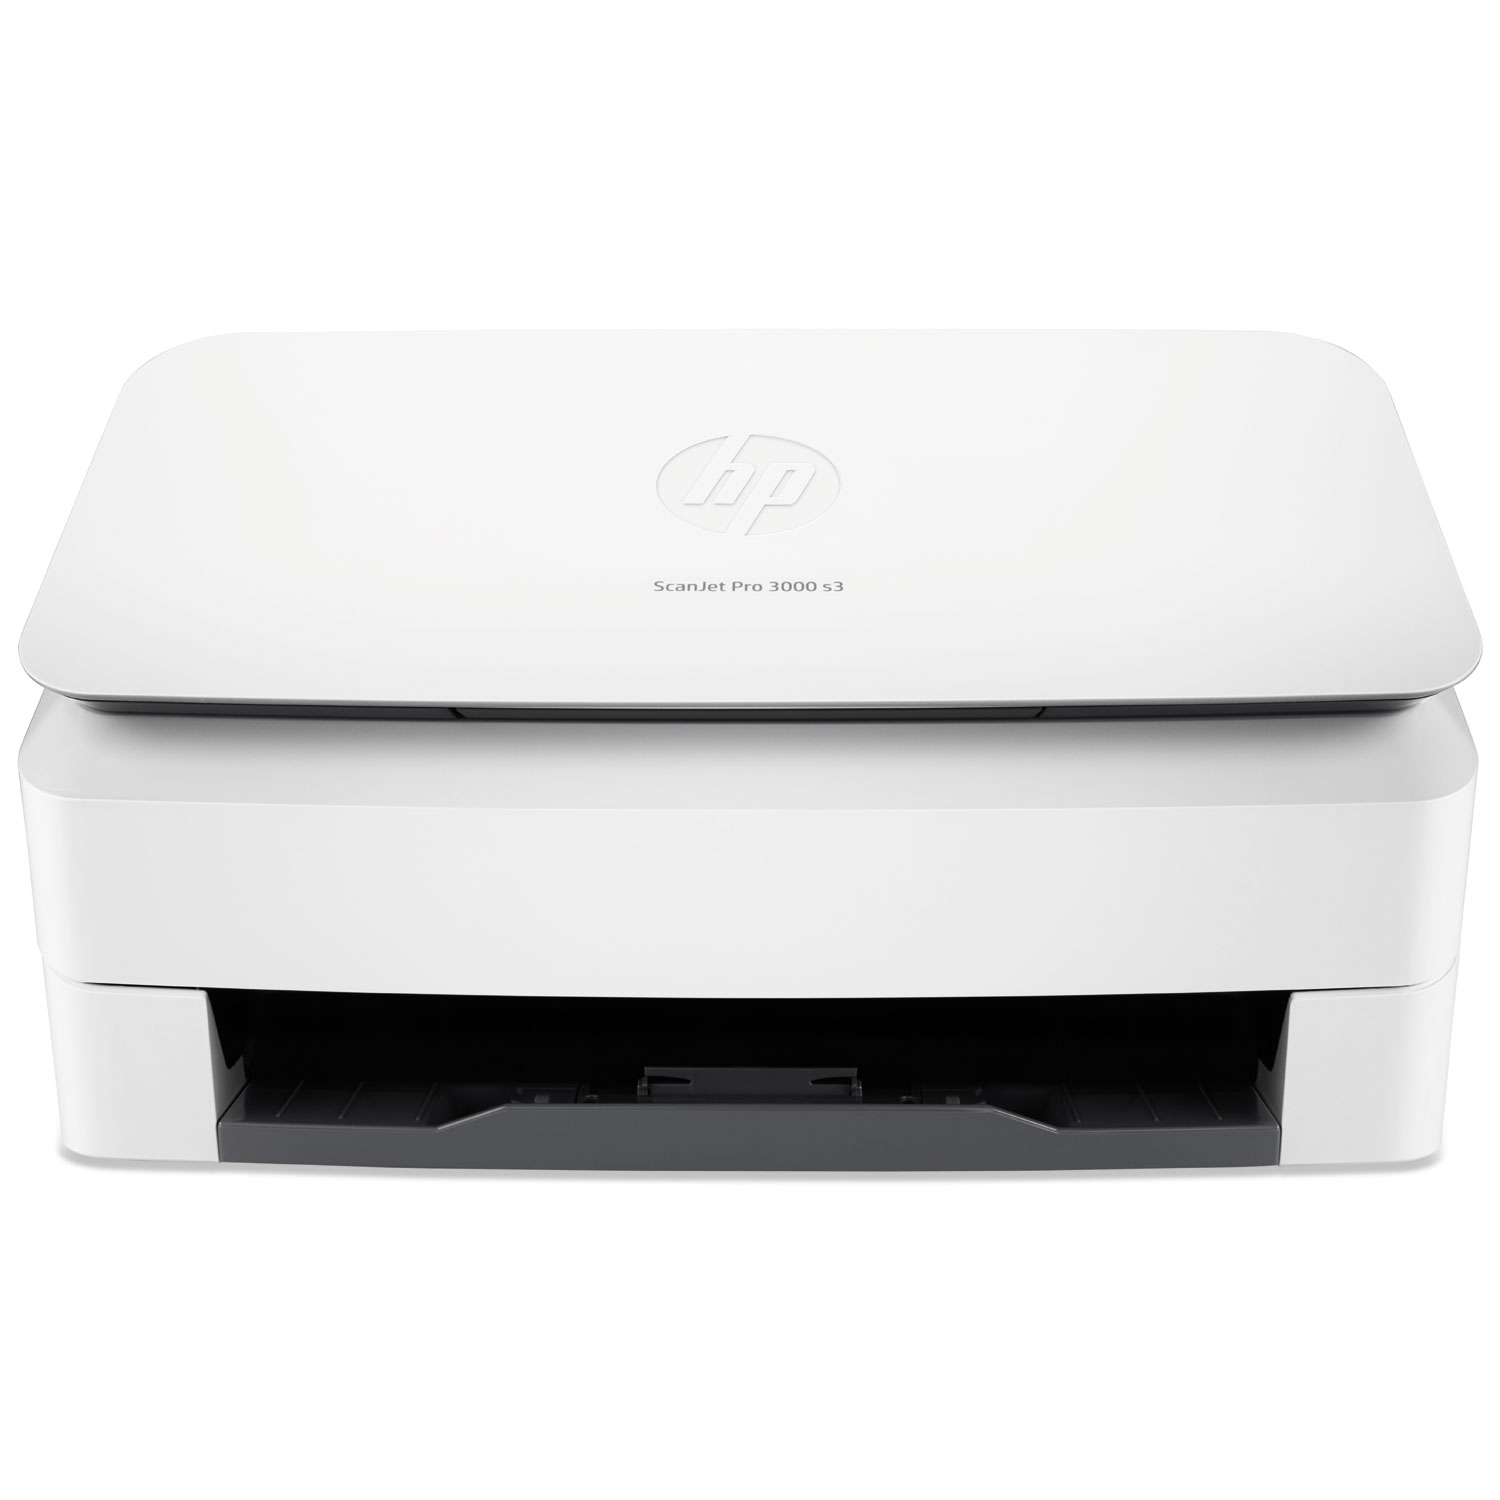  HP L2753A#BGJ ScanJet Pro 3000 s3 Sheet-Feed Scanner, 600 dpi Optical Resolution, 50-Sheet Duplex Auto Document Feeder (HEWL2753A) 